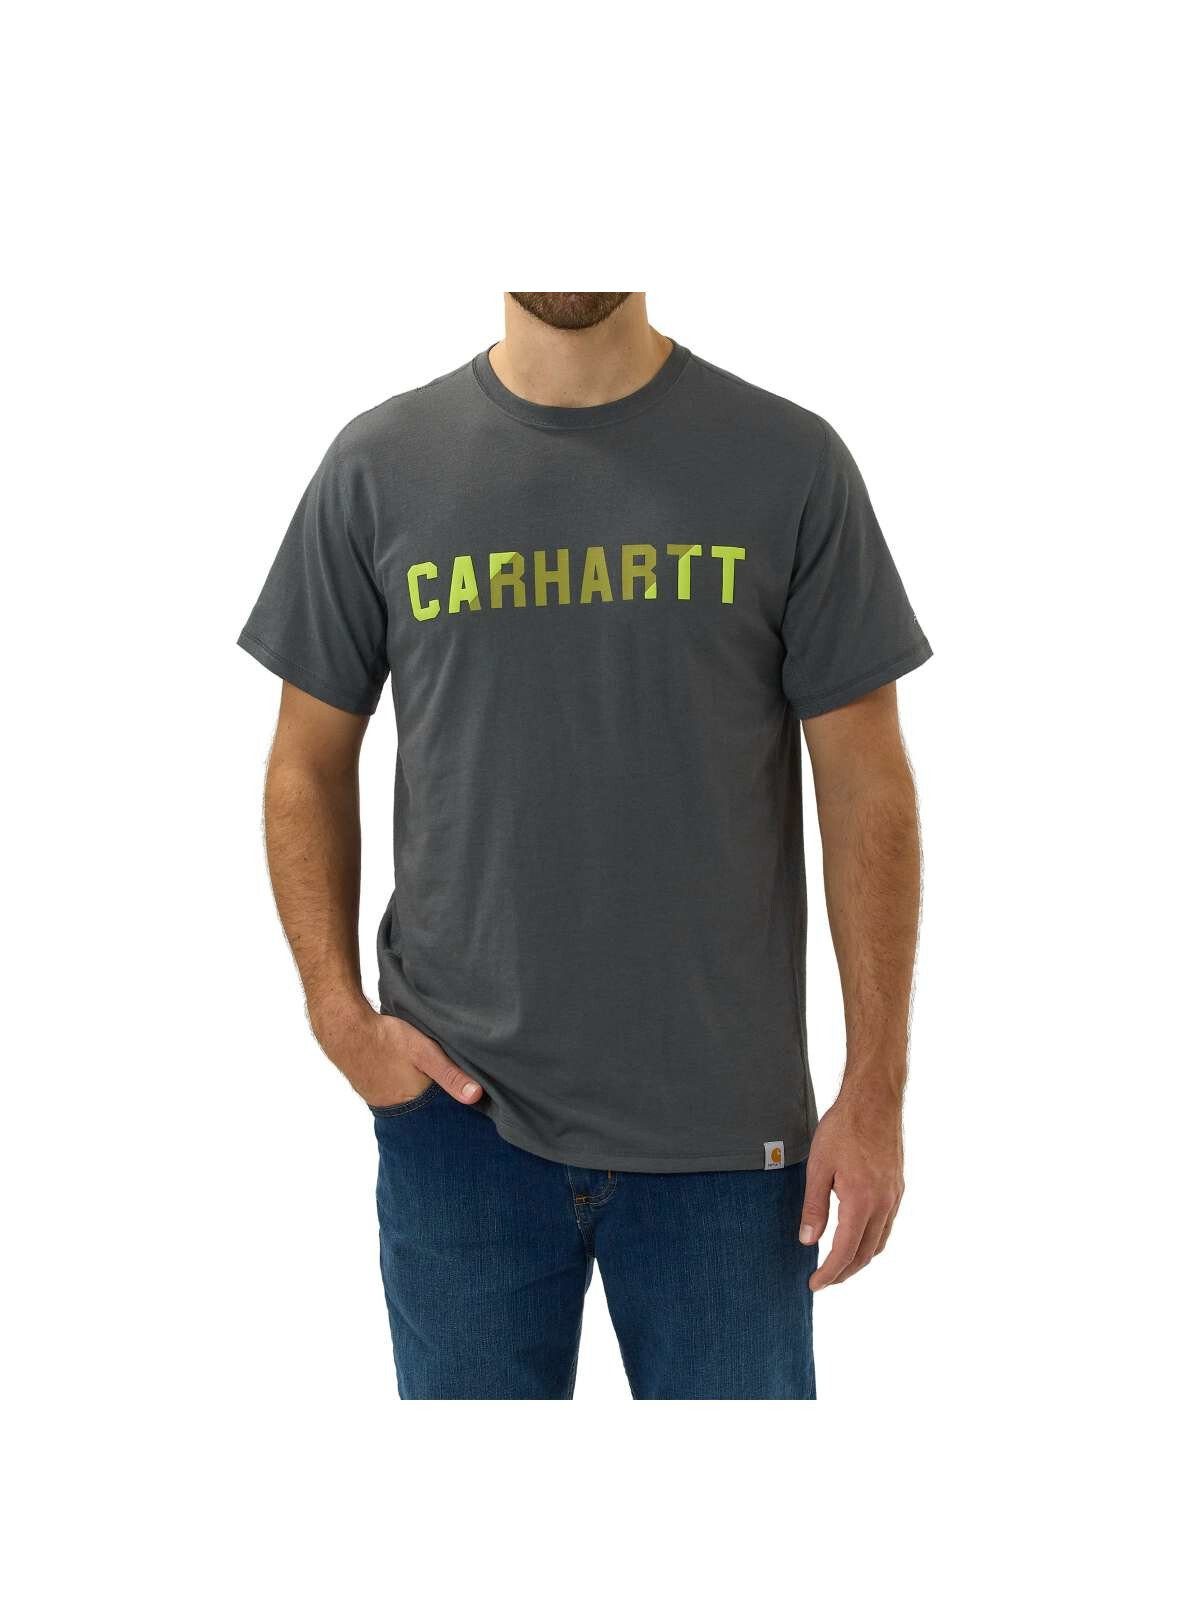 Carhartt T-Shirt Carhartt Logo T-Shirt Grau carbon heather